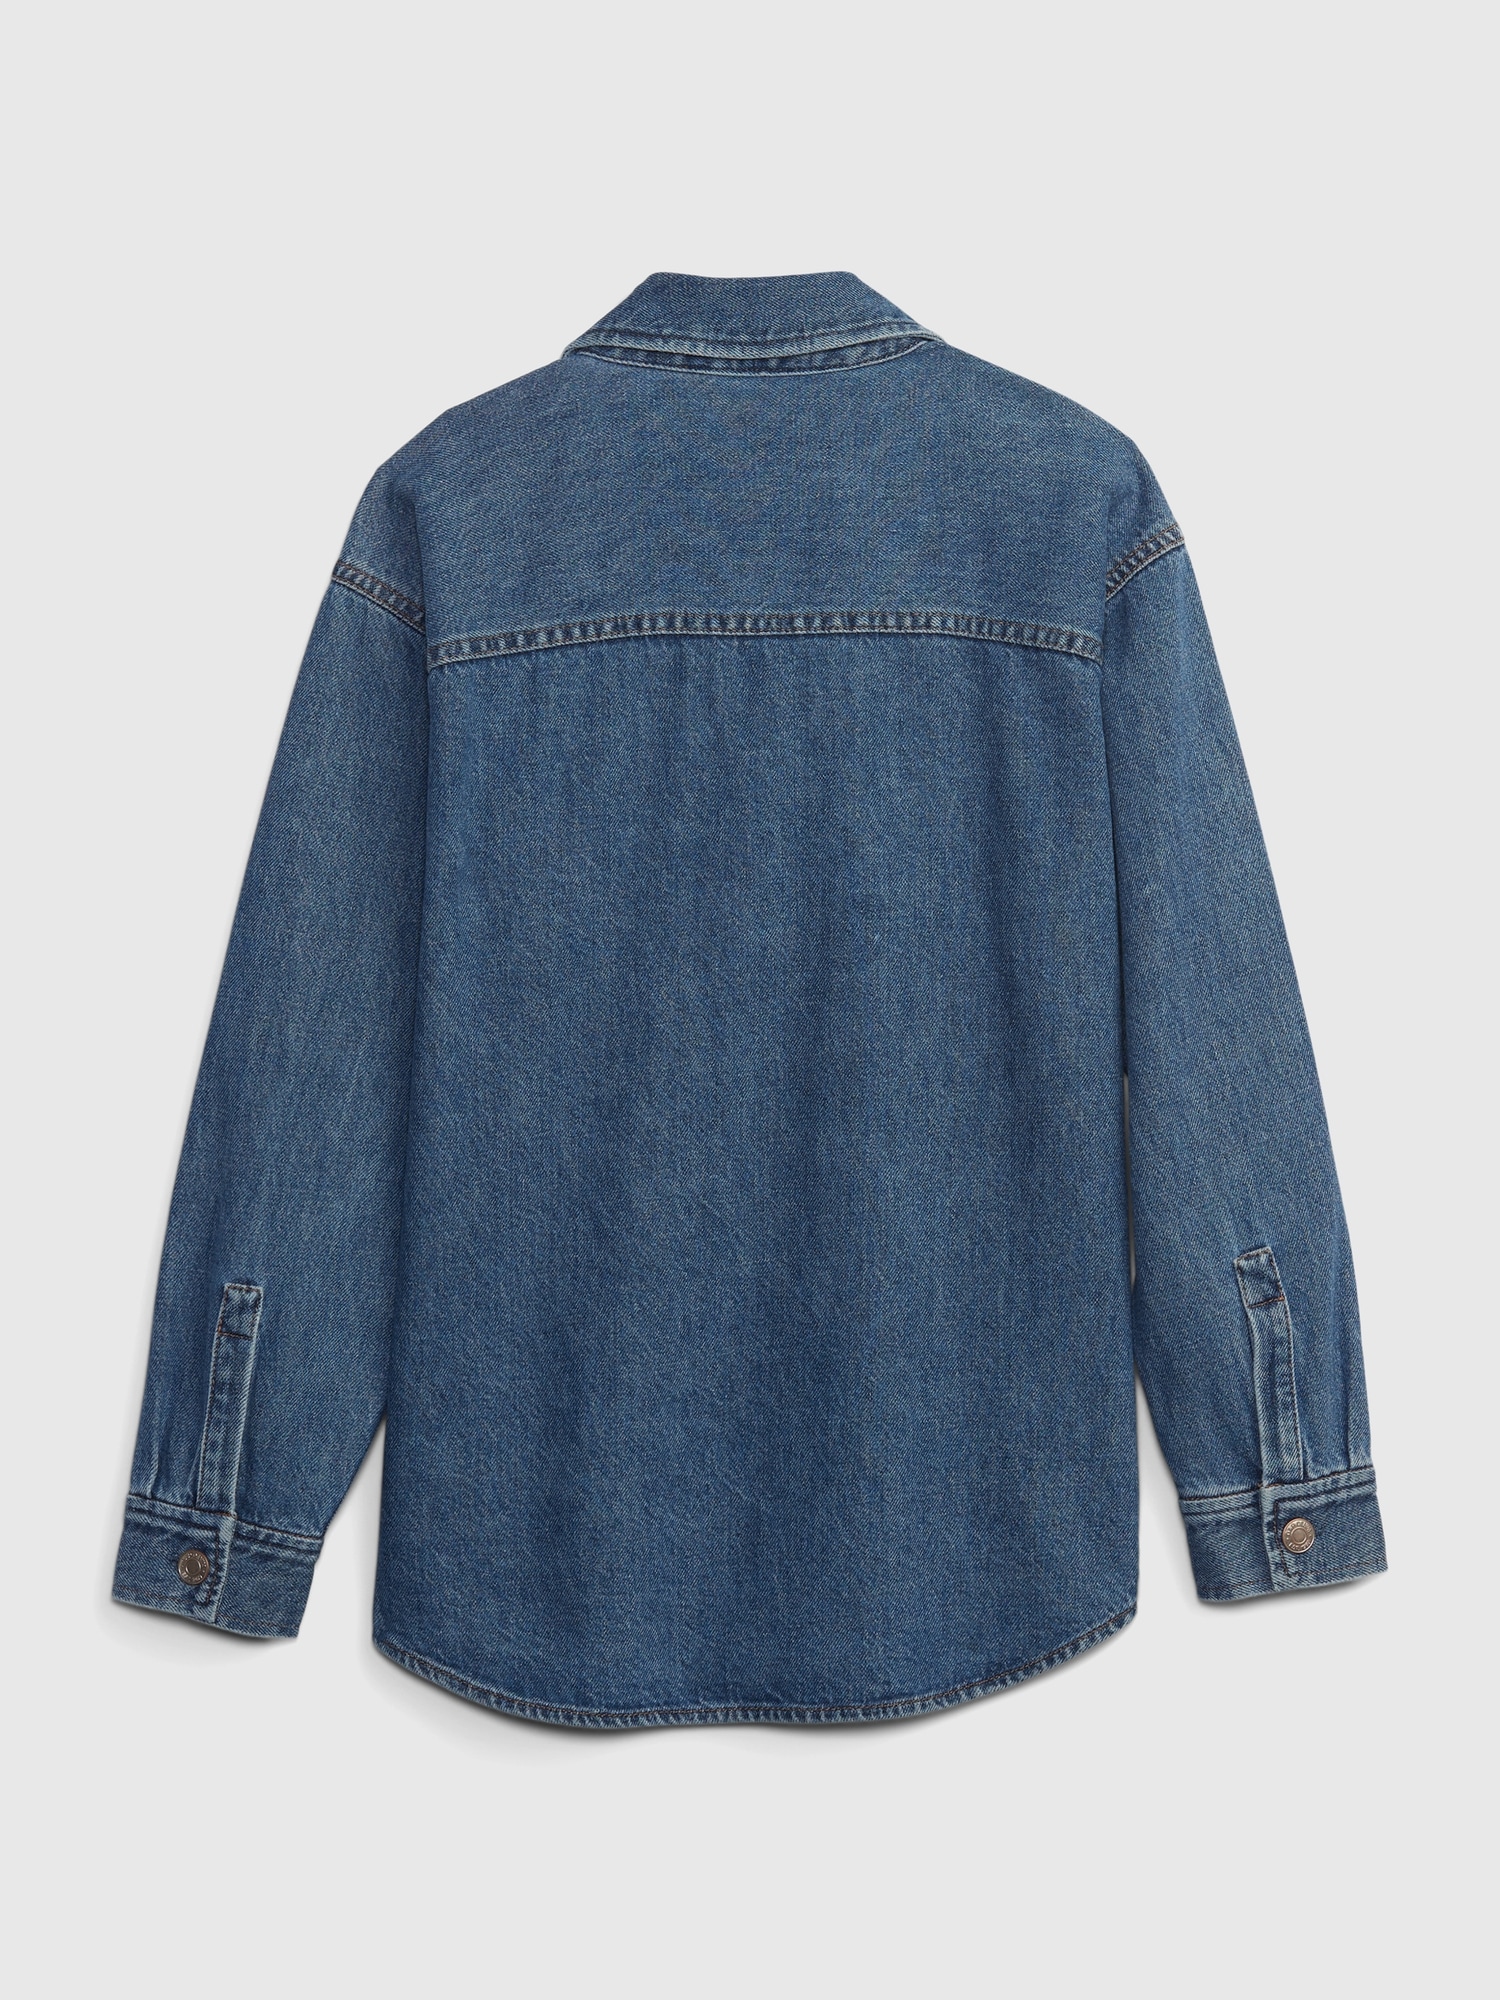 Kids Oversized Denim Shirt Jacket | Gap